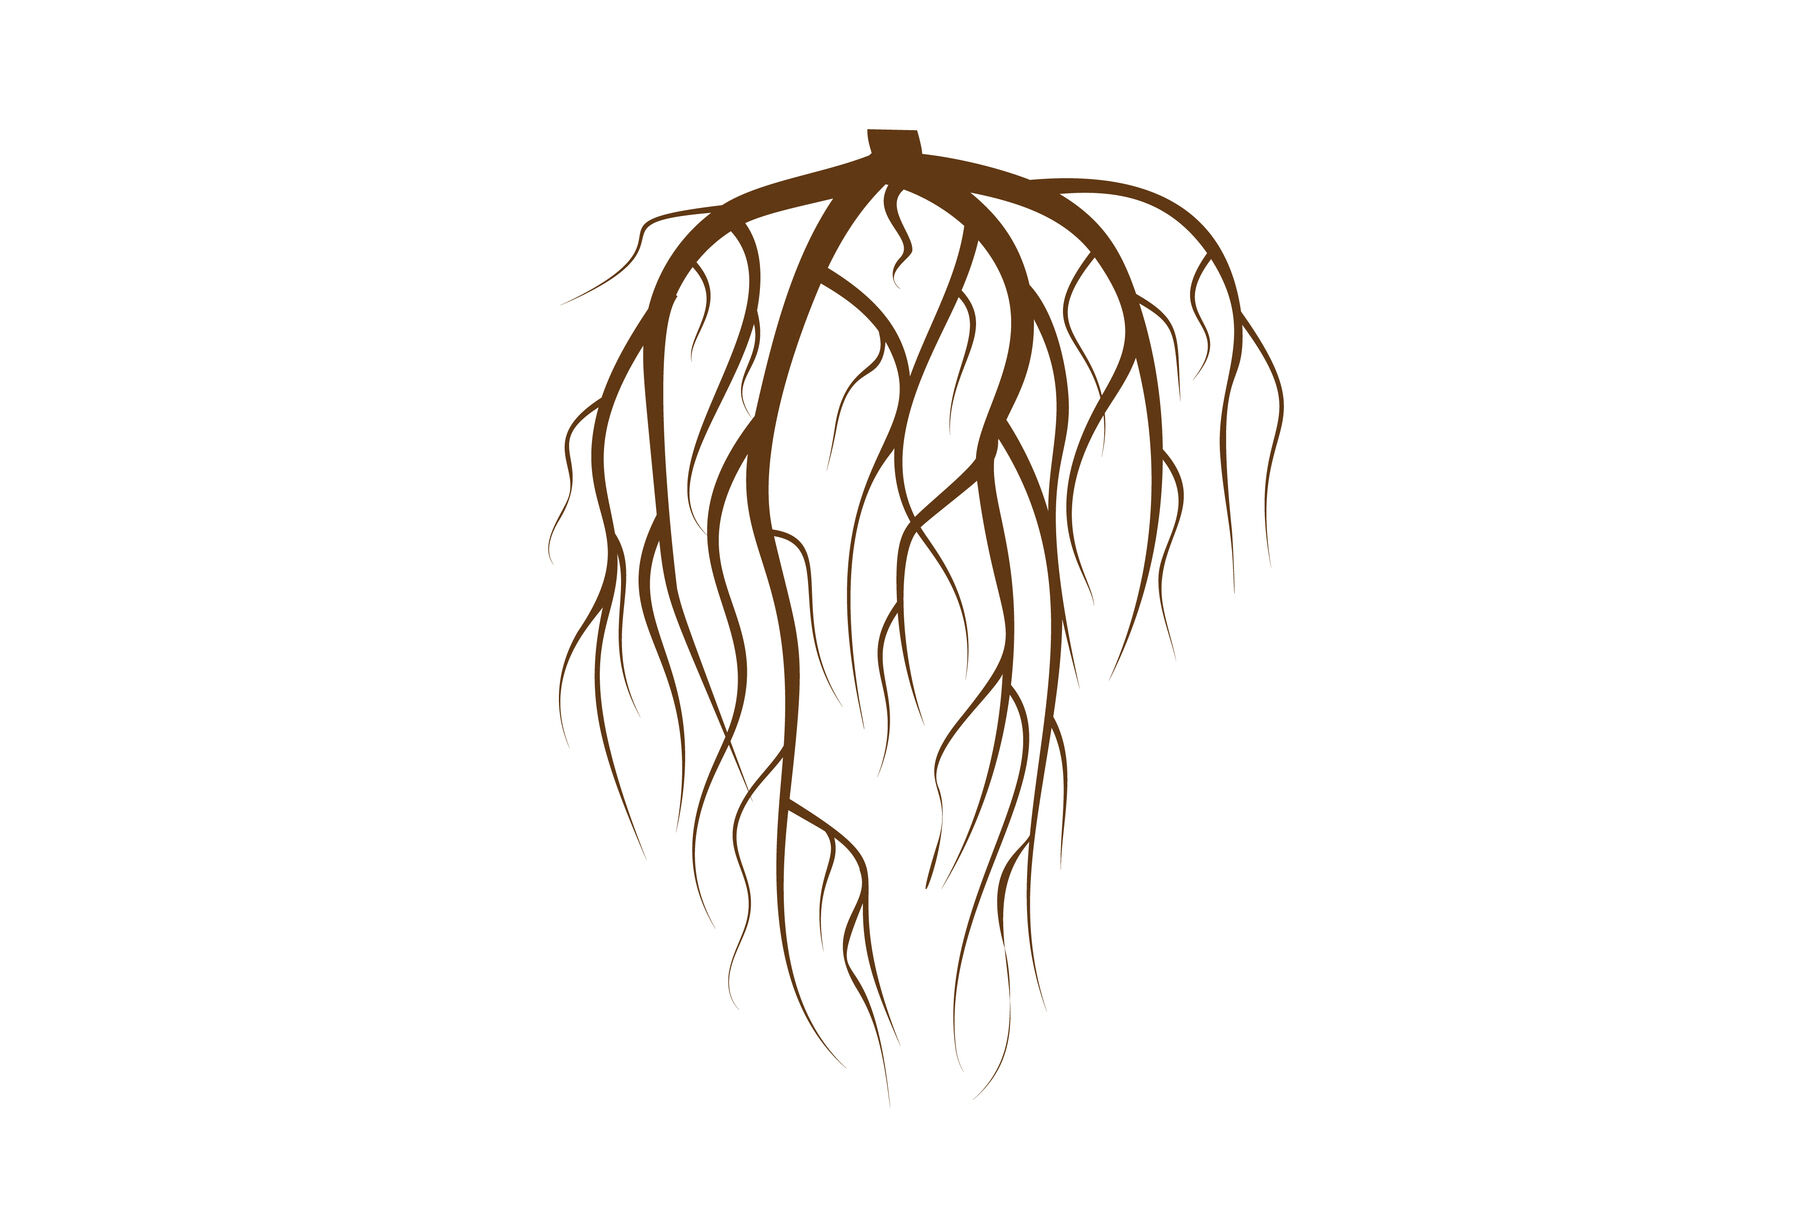 tree roots underground drawing